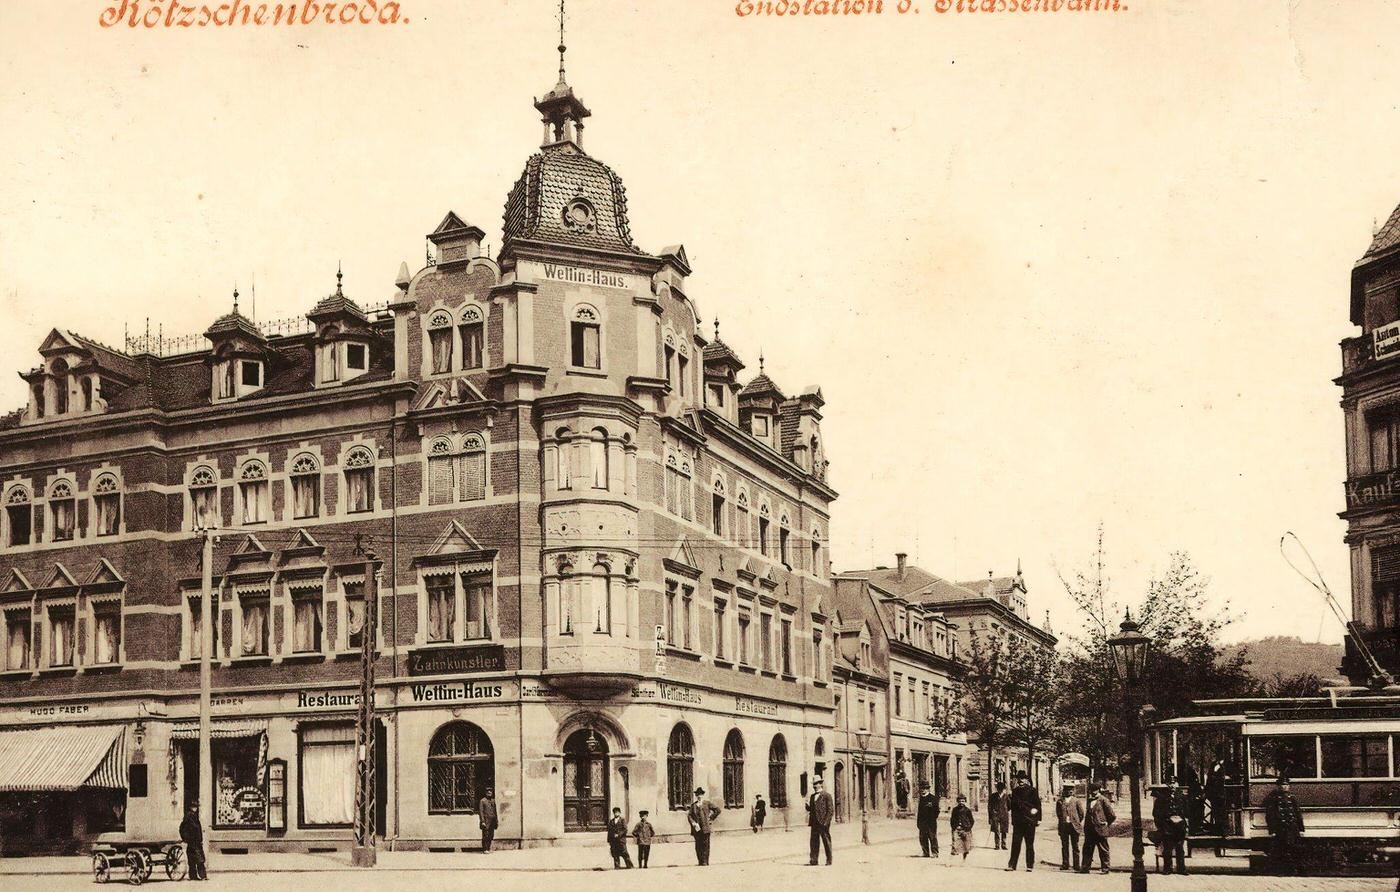 Lossnitzbahn in Radebeul, Leiterwagen, Wettin-Haus, 1899.